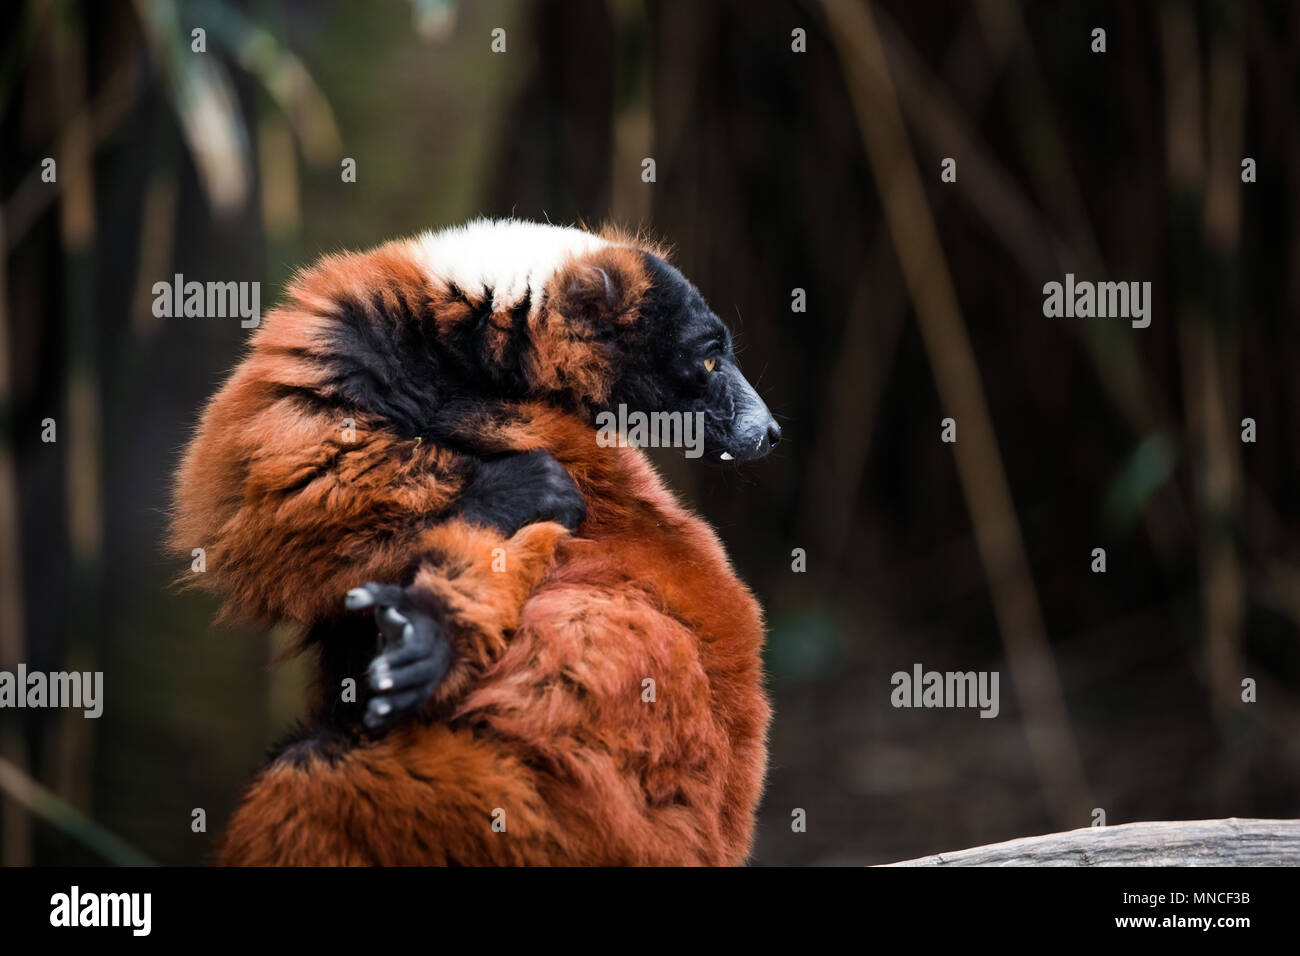 Red ruffed lemur animal close up view Stock Photo